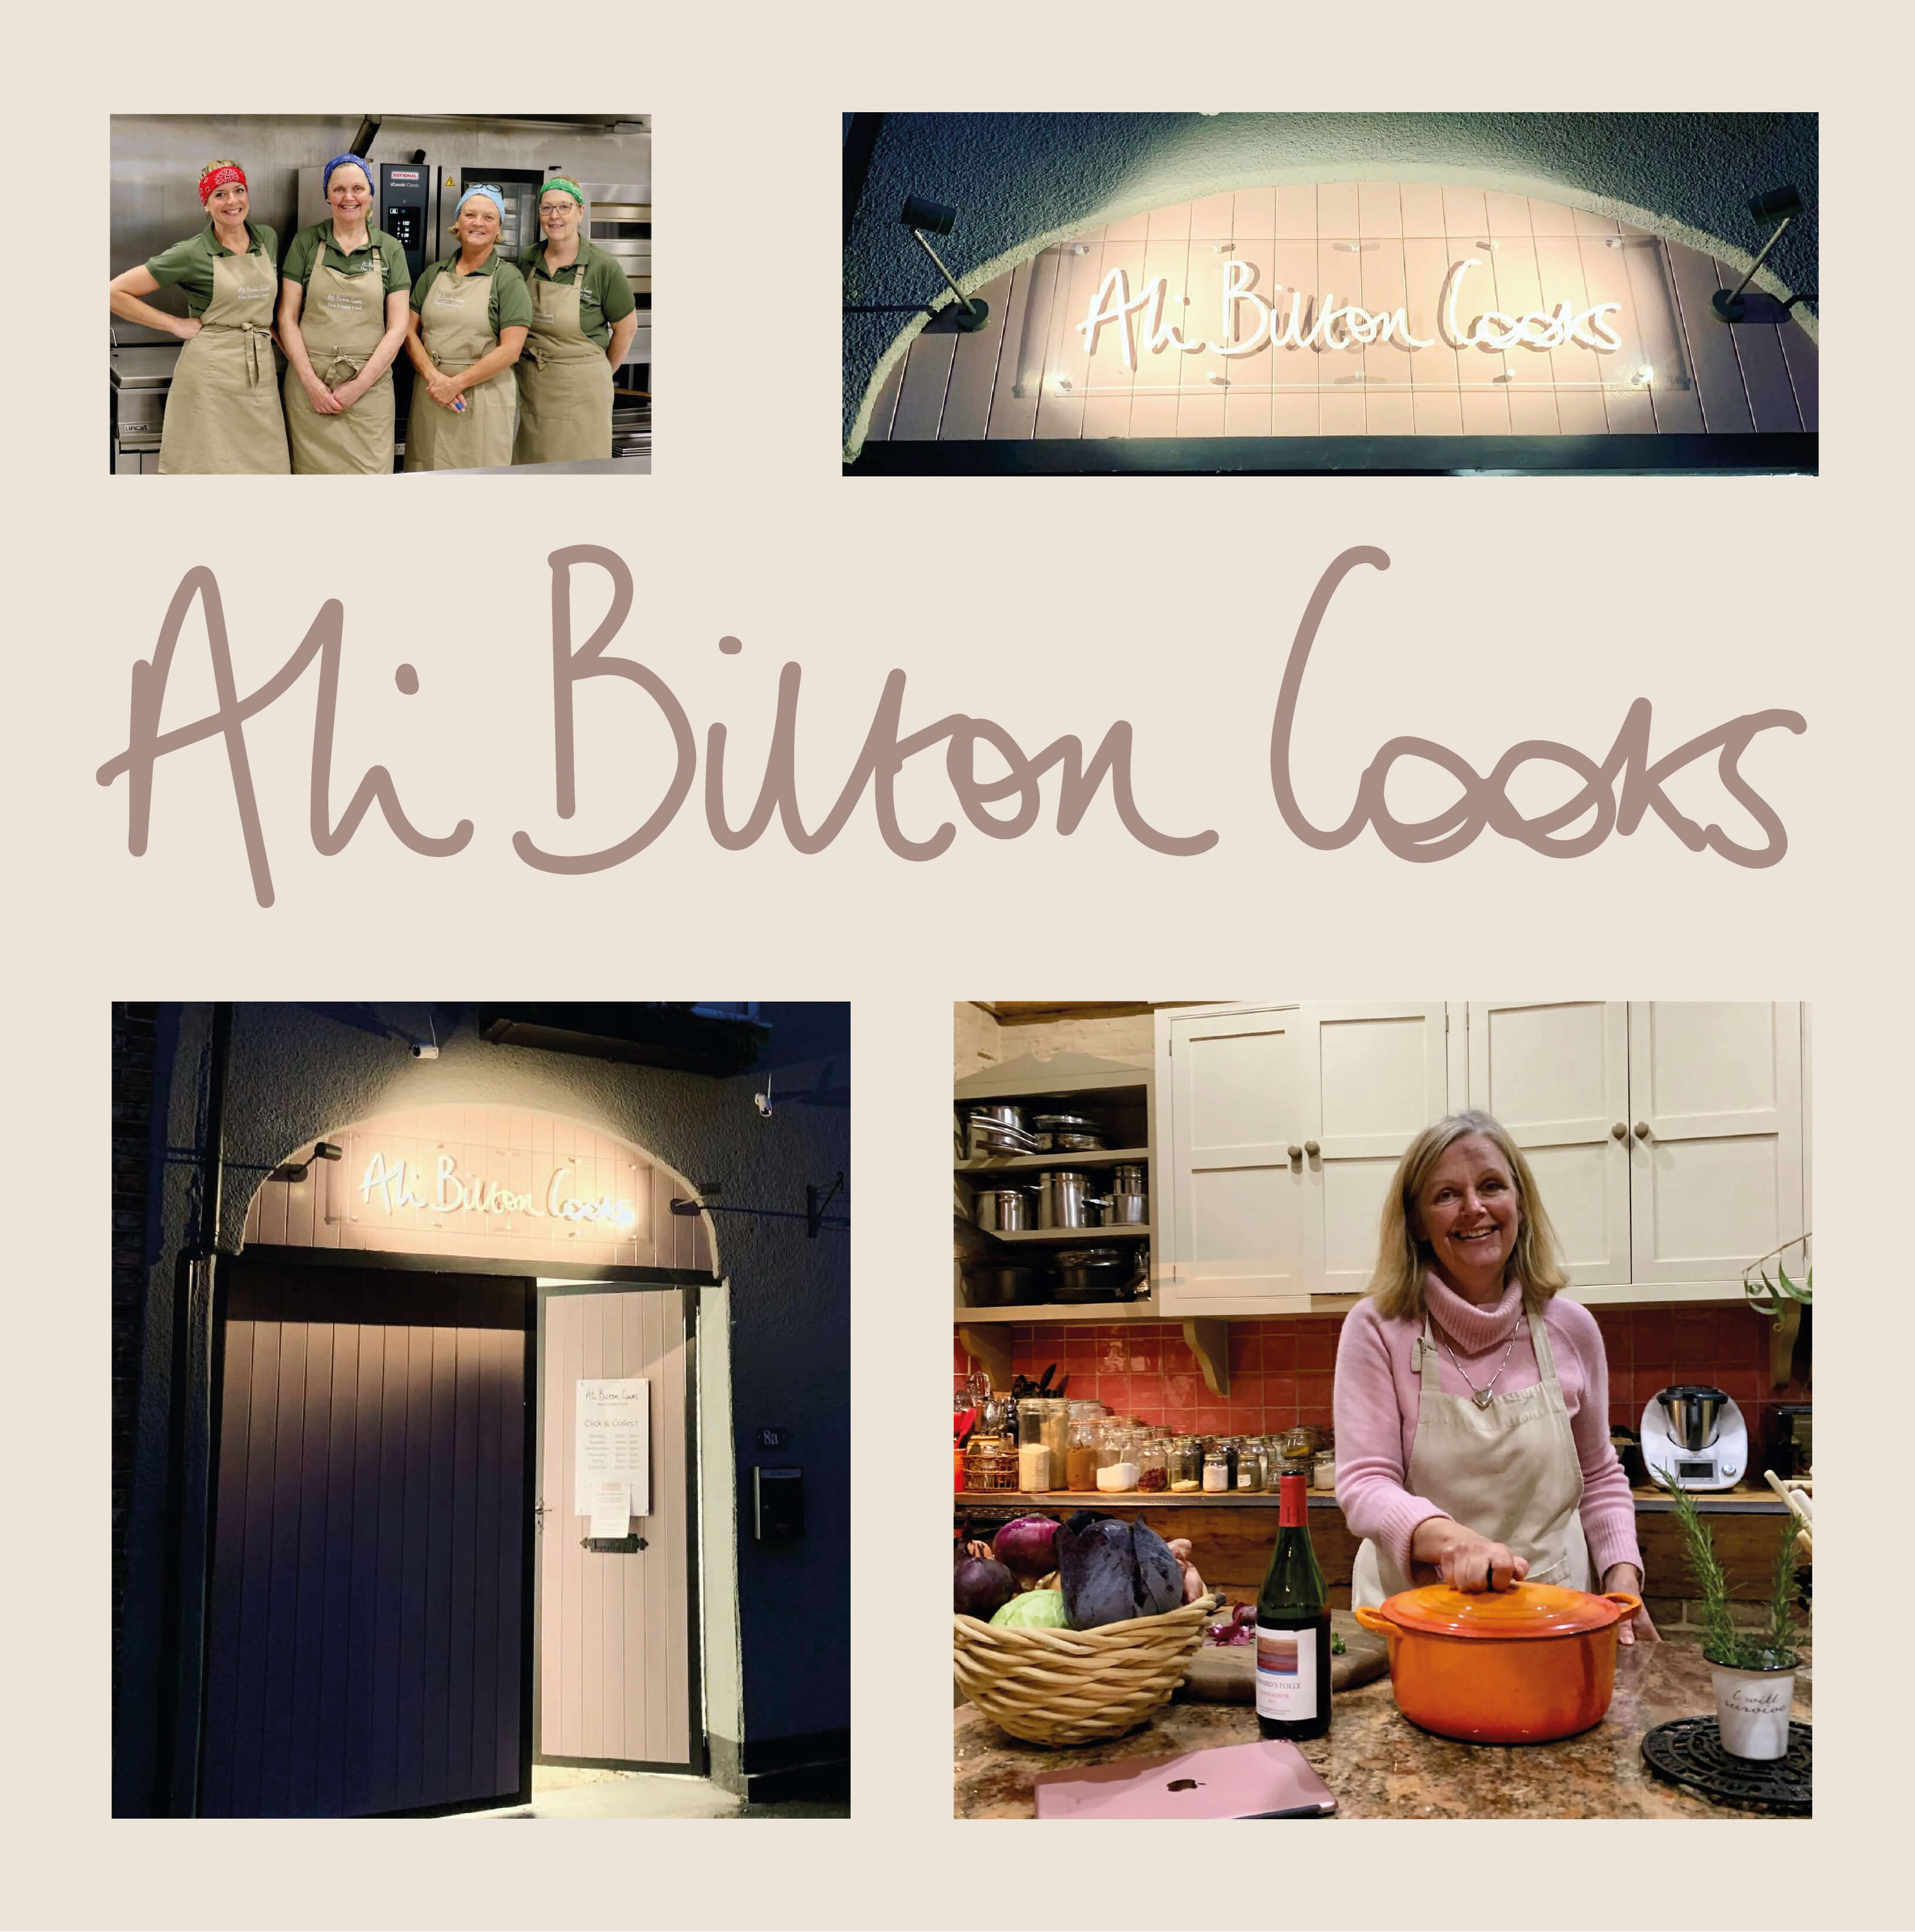 Ali Bilton Cooks